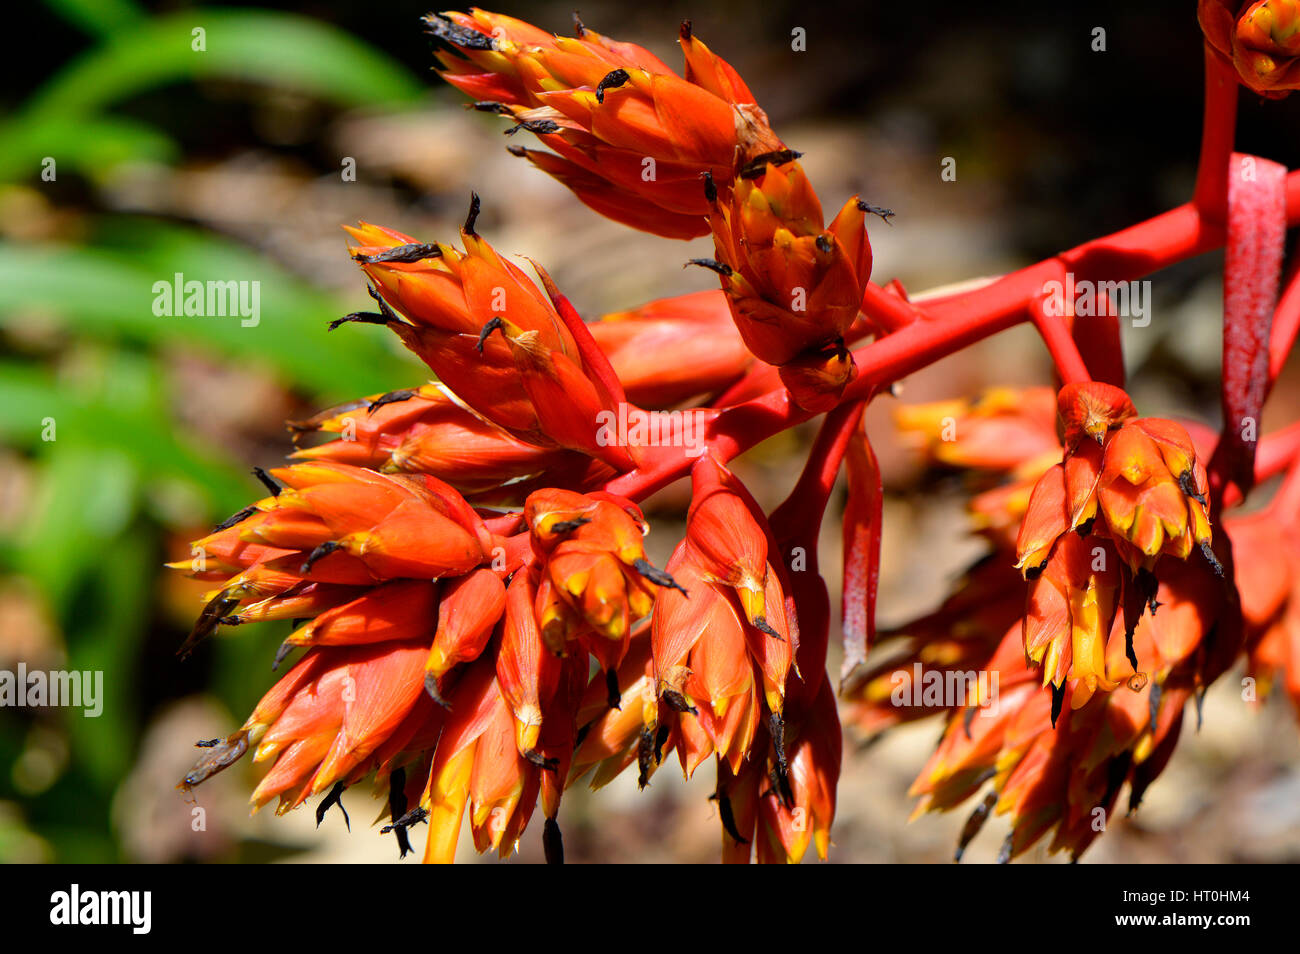 Aechmea rubens bromeliad flowers Stock Photo